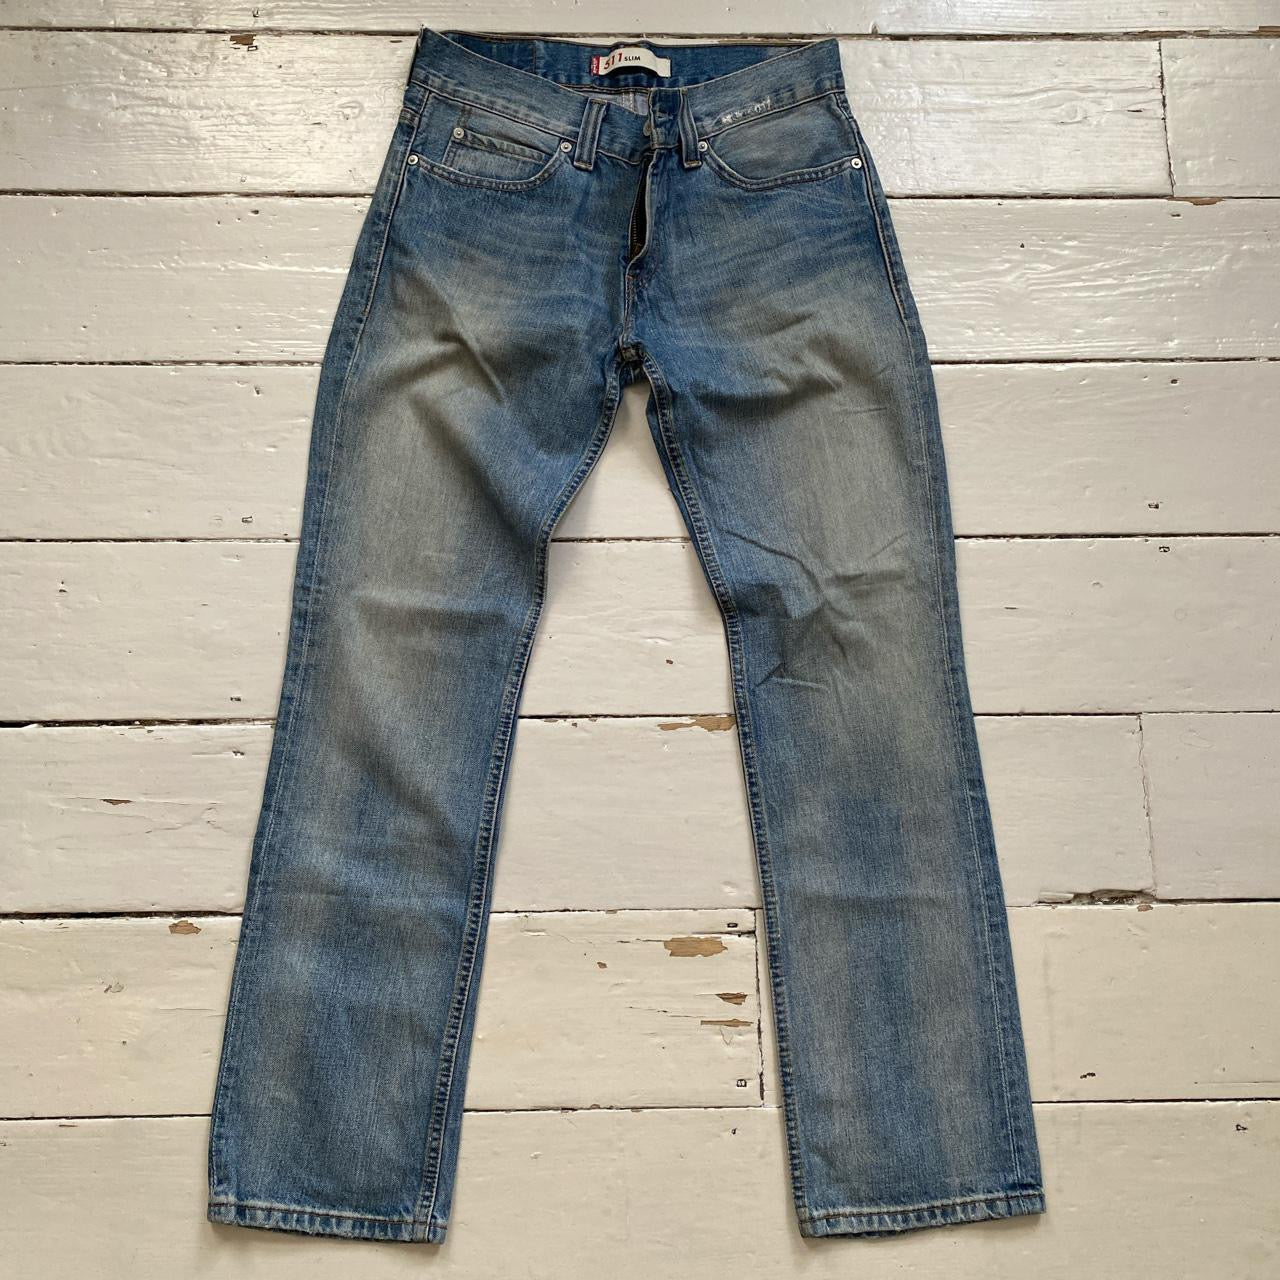 Levis 511 Slim Light Jeans (32/32)